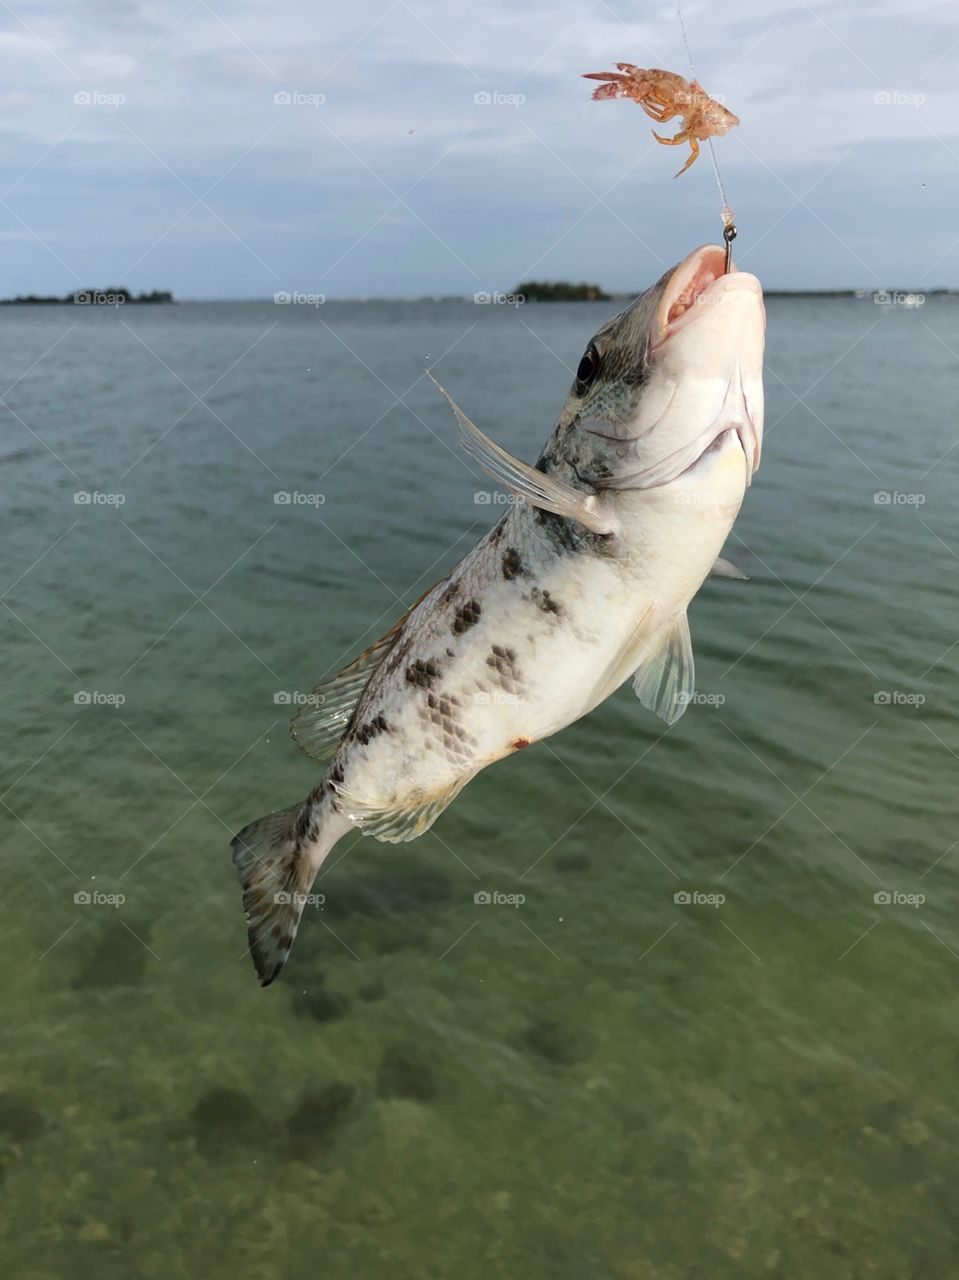 Fish on hook snapper Florida 